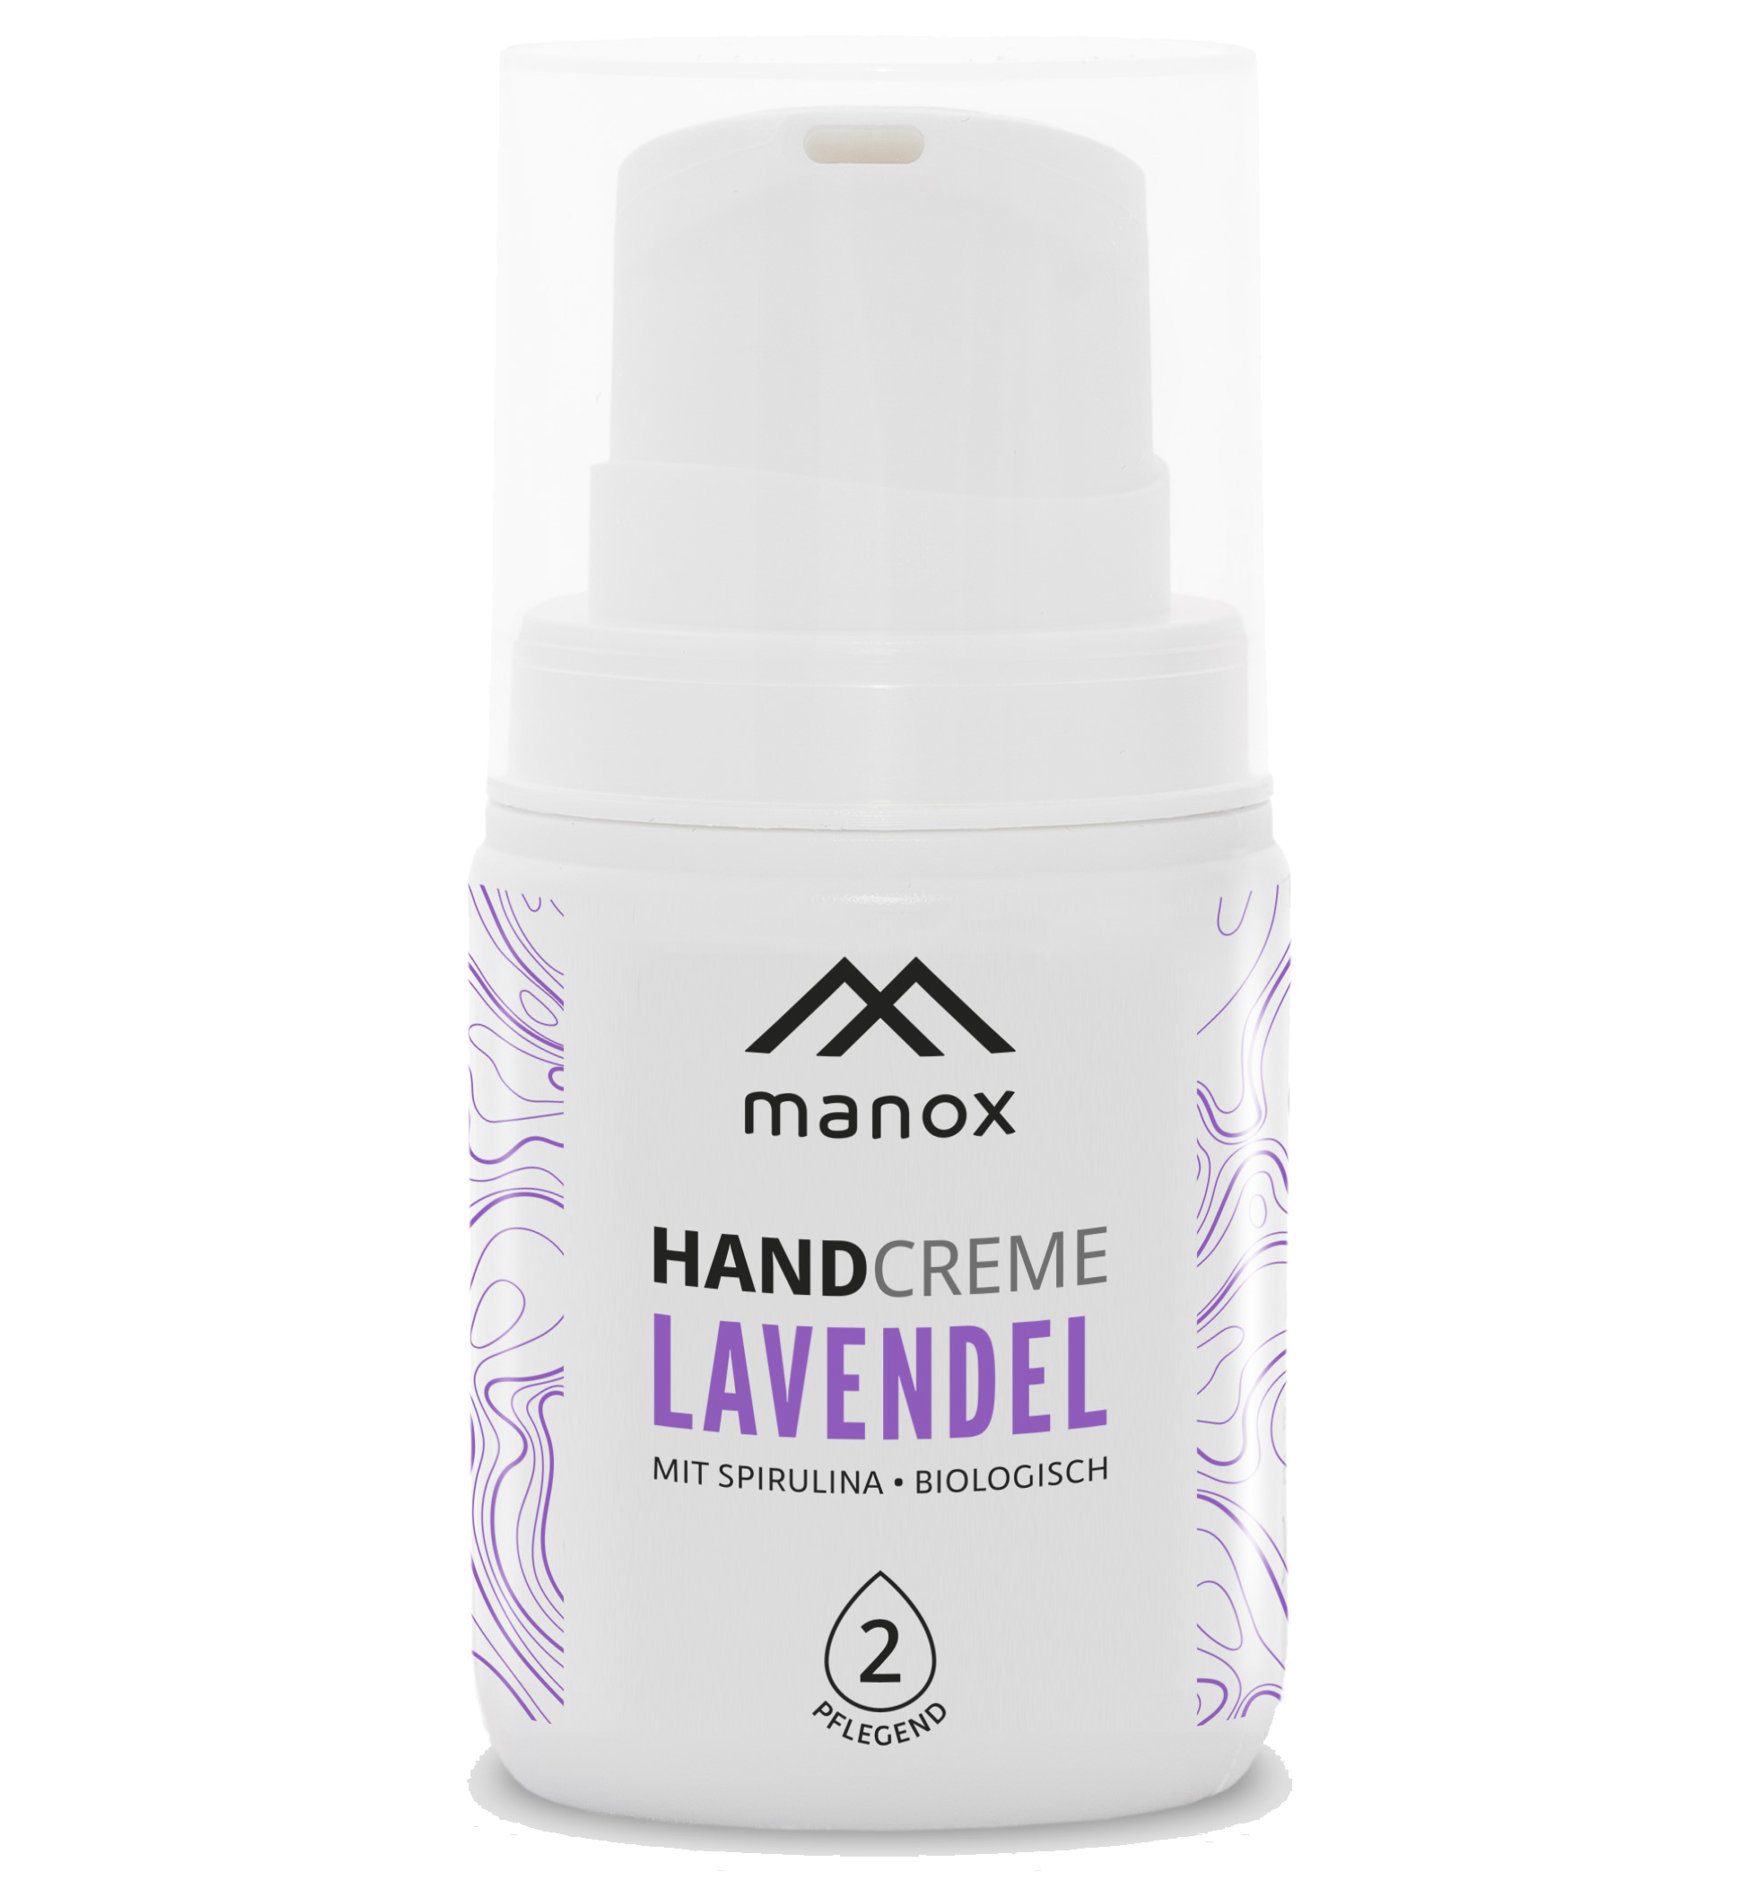 Manox Handcreme Nr.2 Lavendel Handcreme